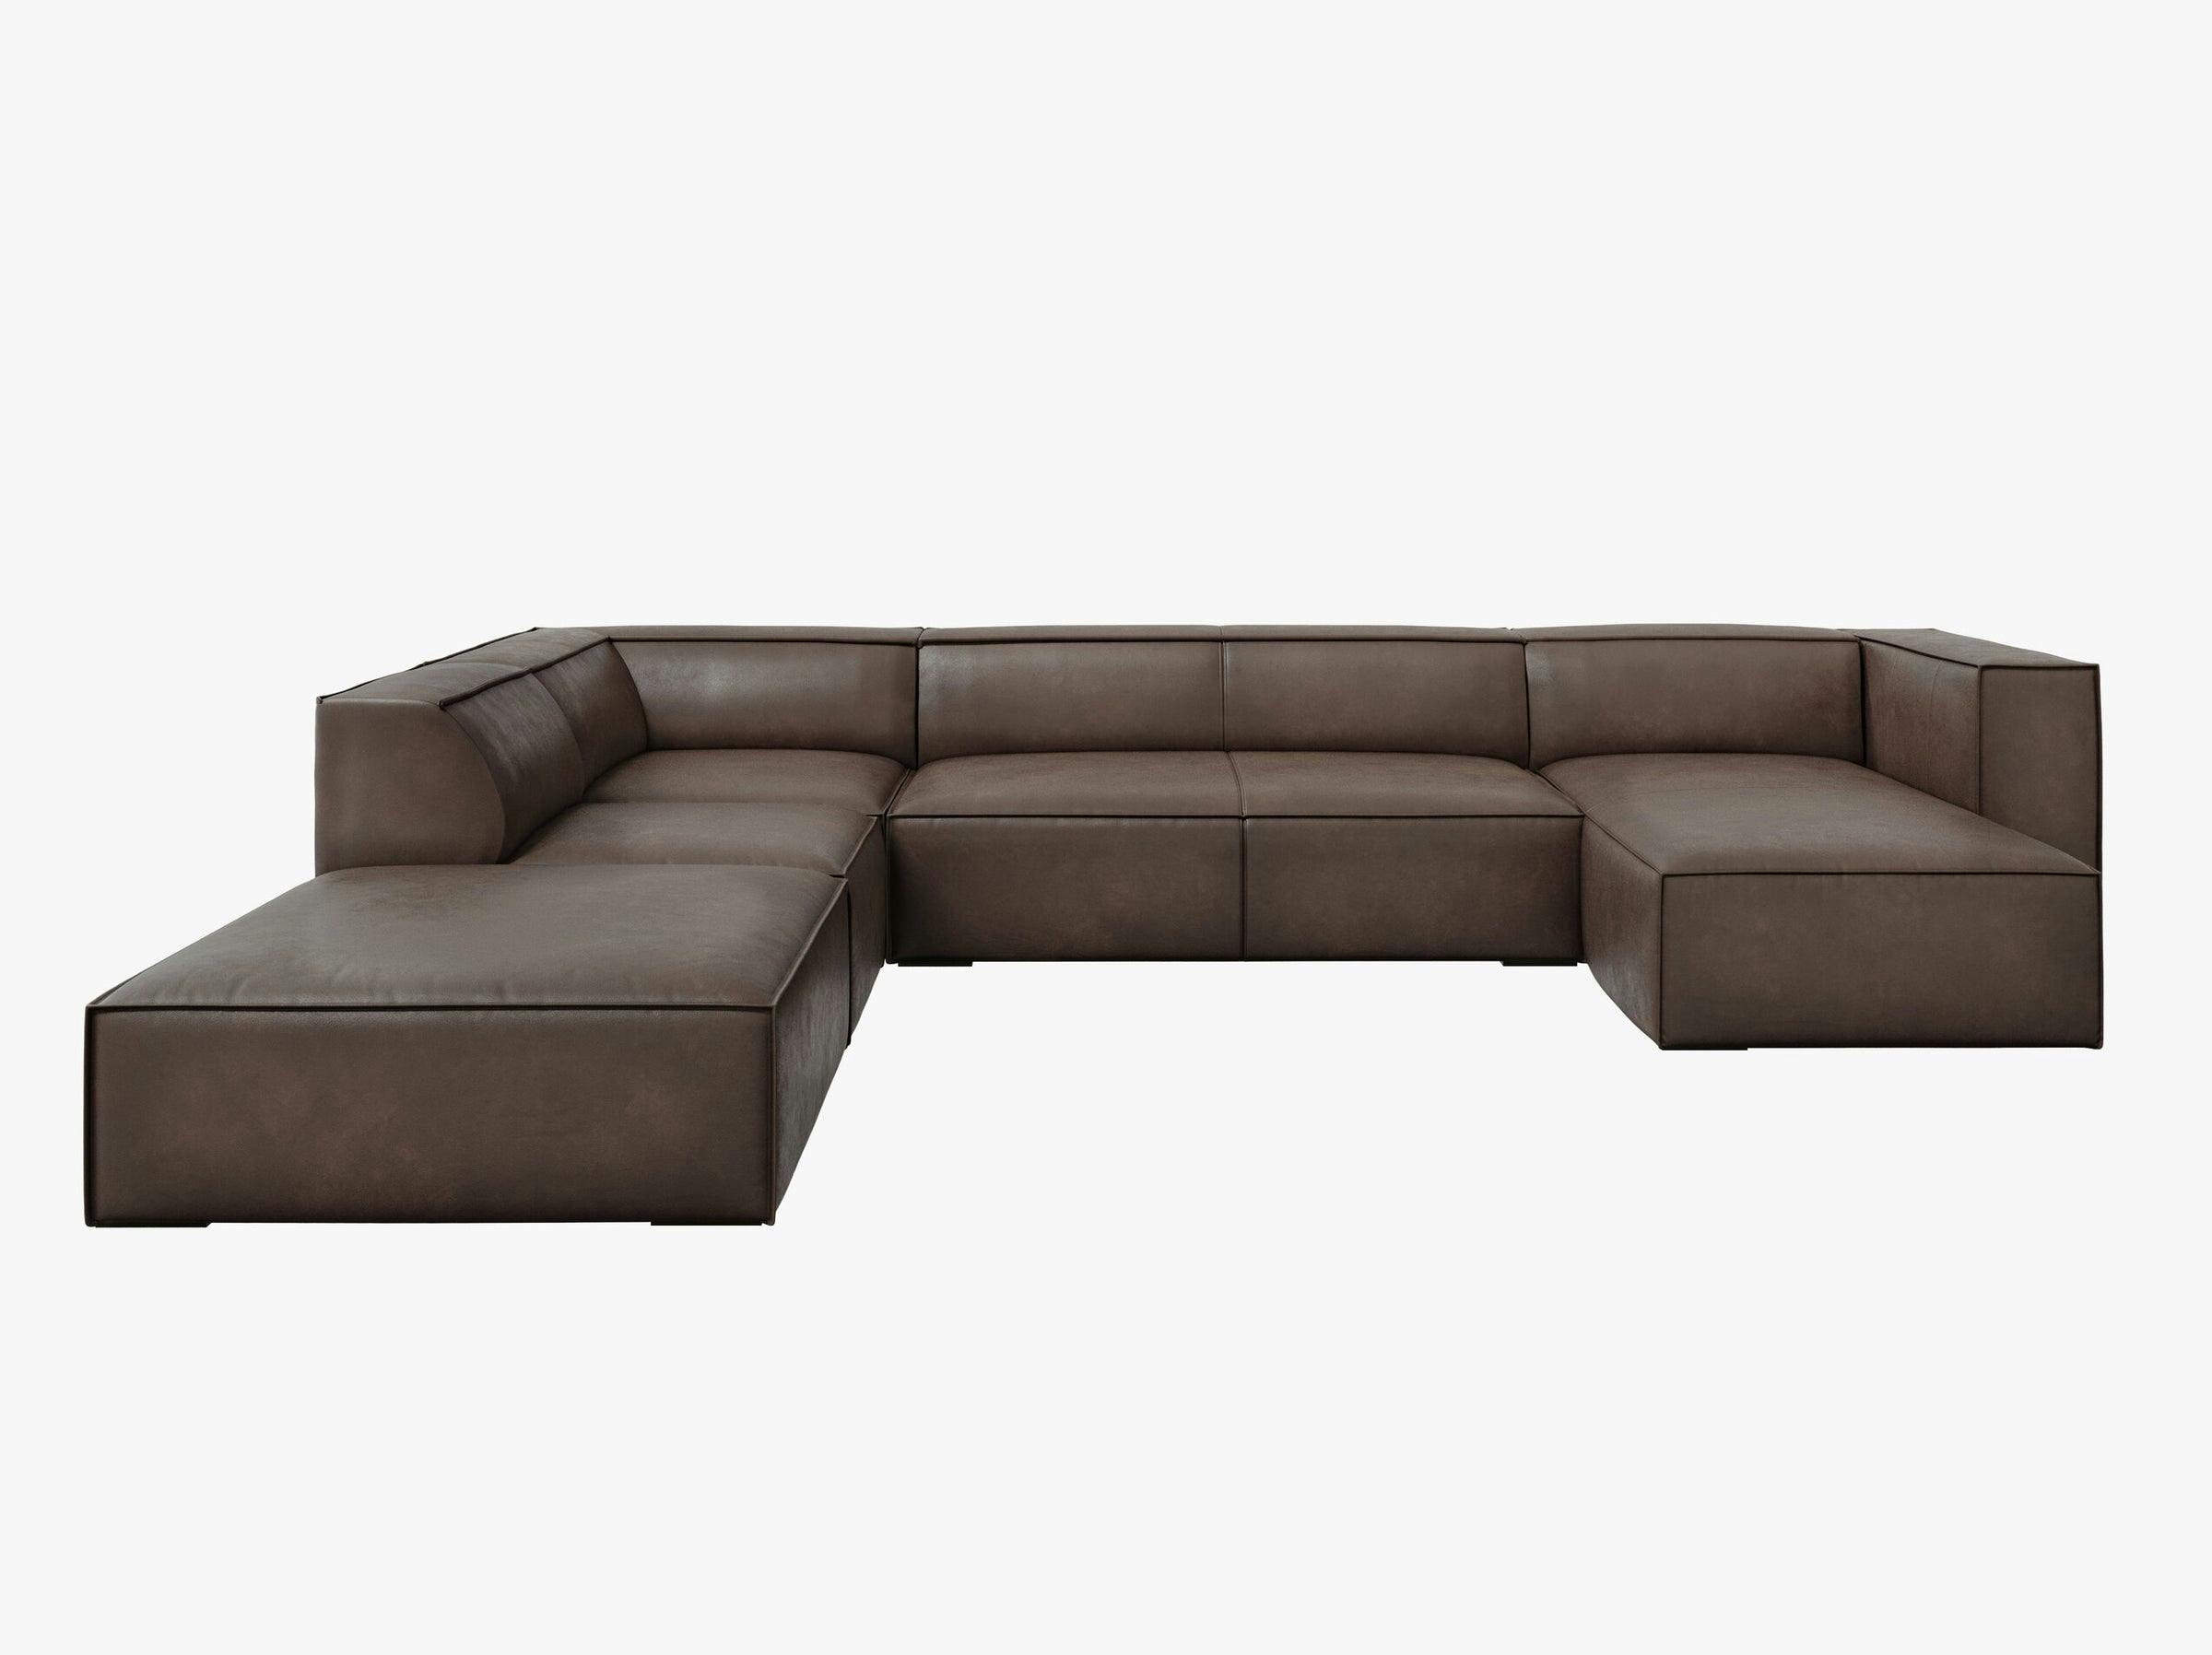 Agawa sofás cuero genuino grey brown